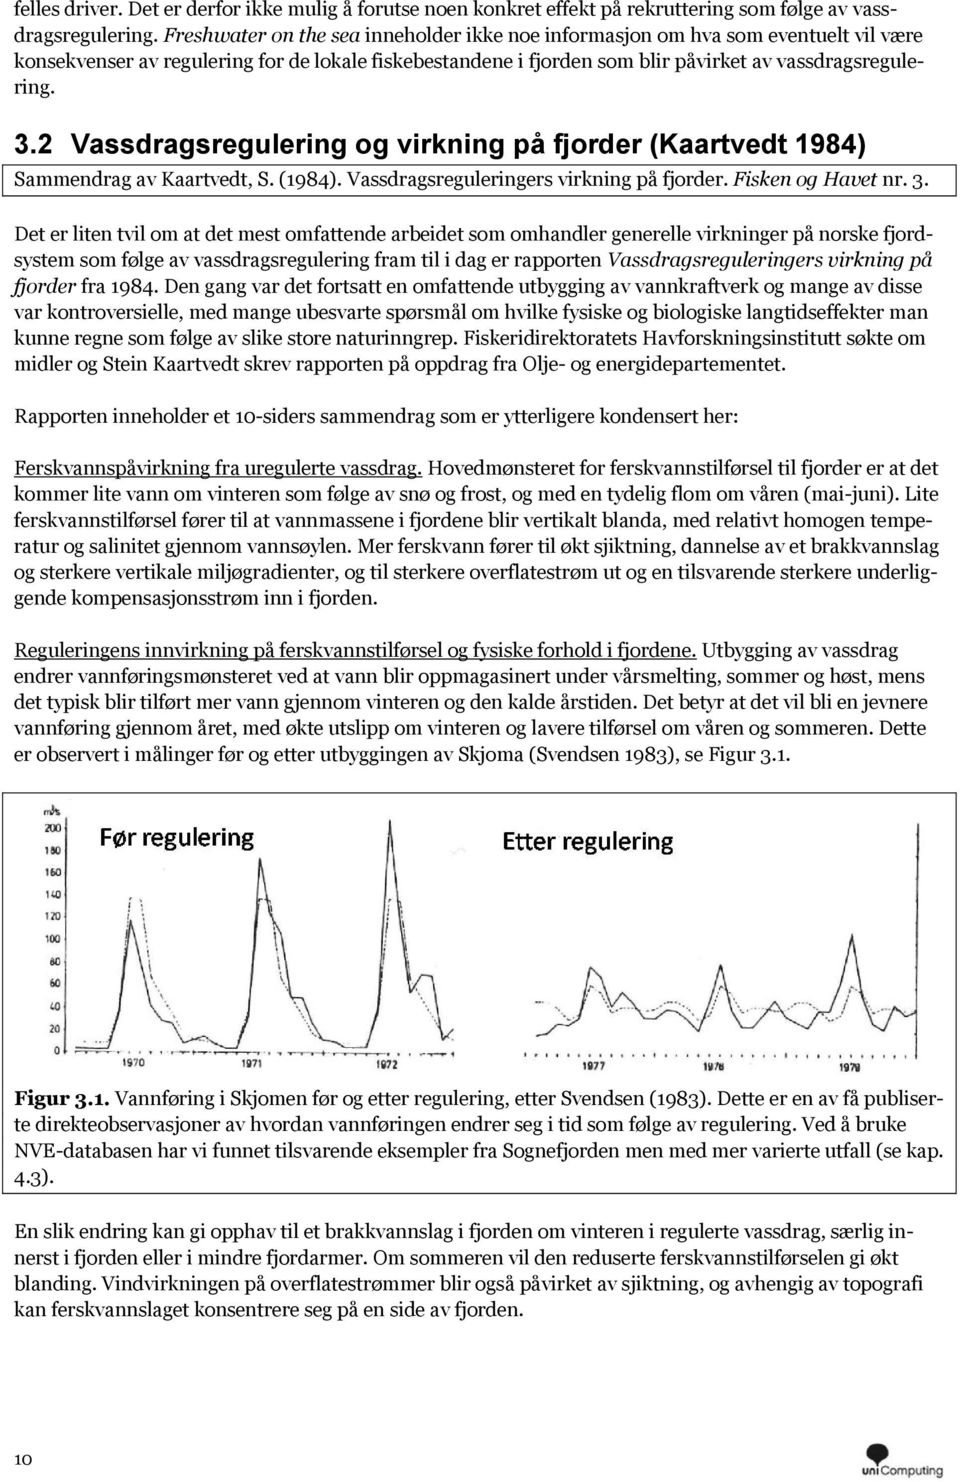 2 Vassdragsregulering og virkning på fjorder (Kaartvedt 1984) Sammendrag av Kaartvedt, S. (1984). Vassdragsreguleringers virkning på fjorder. Fisken og Havet nr. 3.